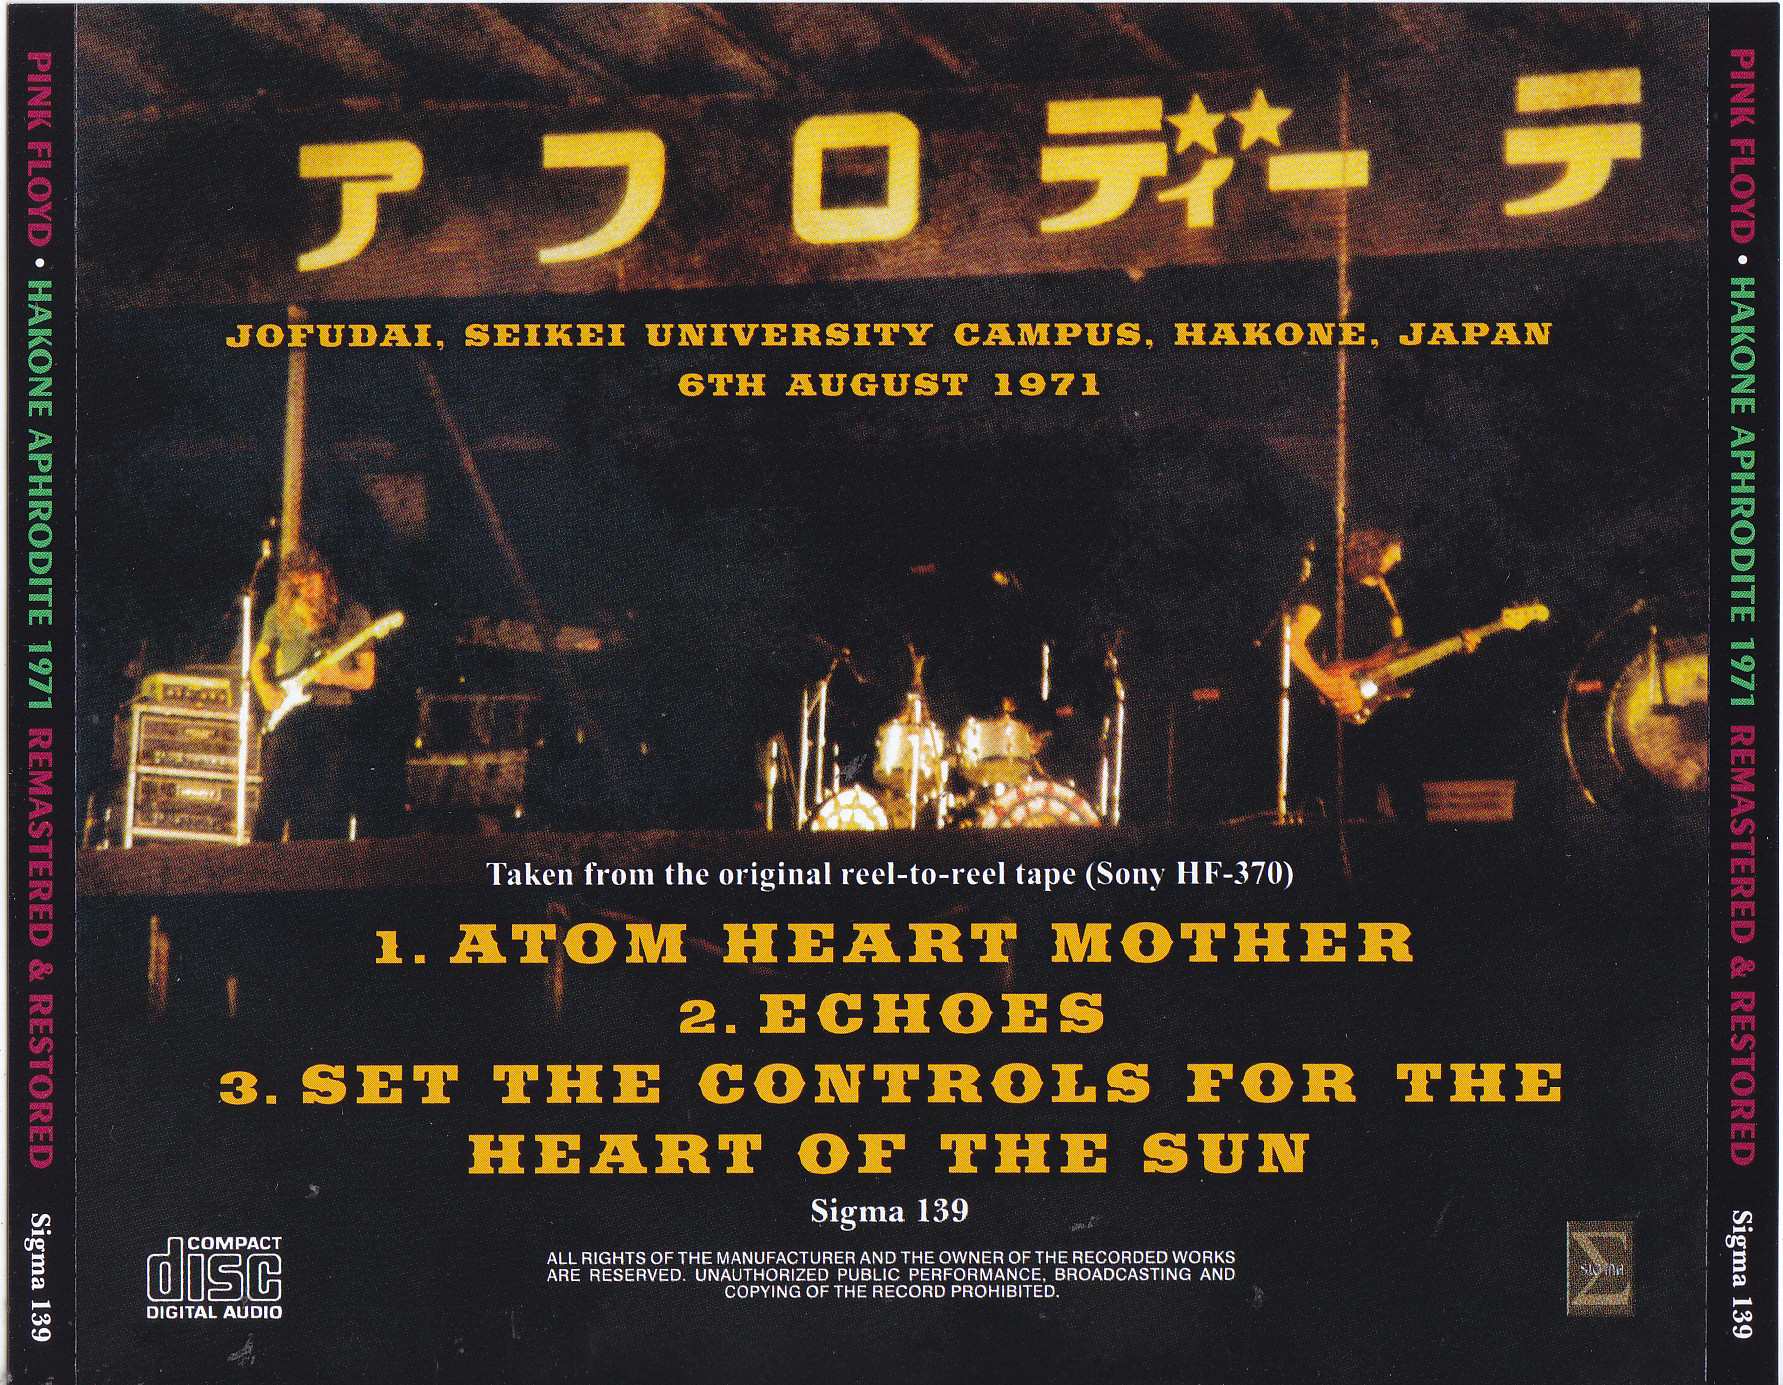 PINK FLOYD - Atom Heart Mother - Hakone Aphrodite - Japan 1971